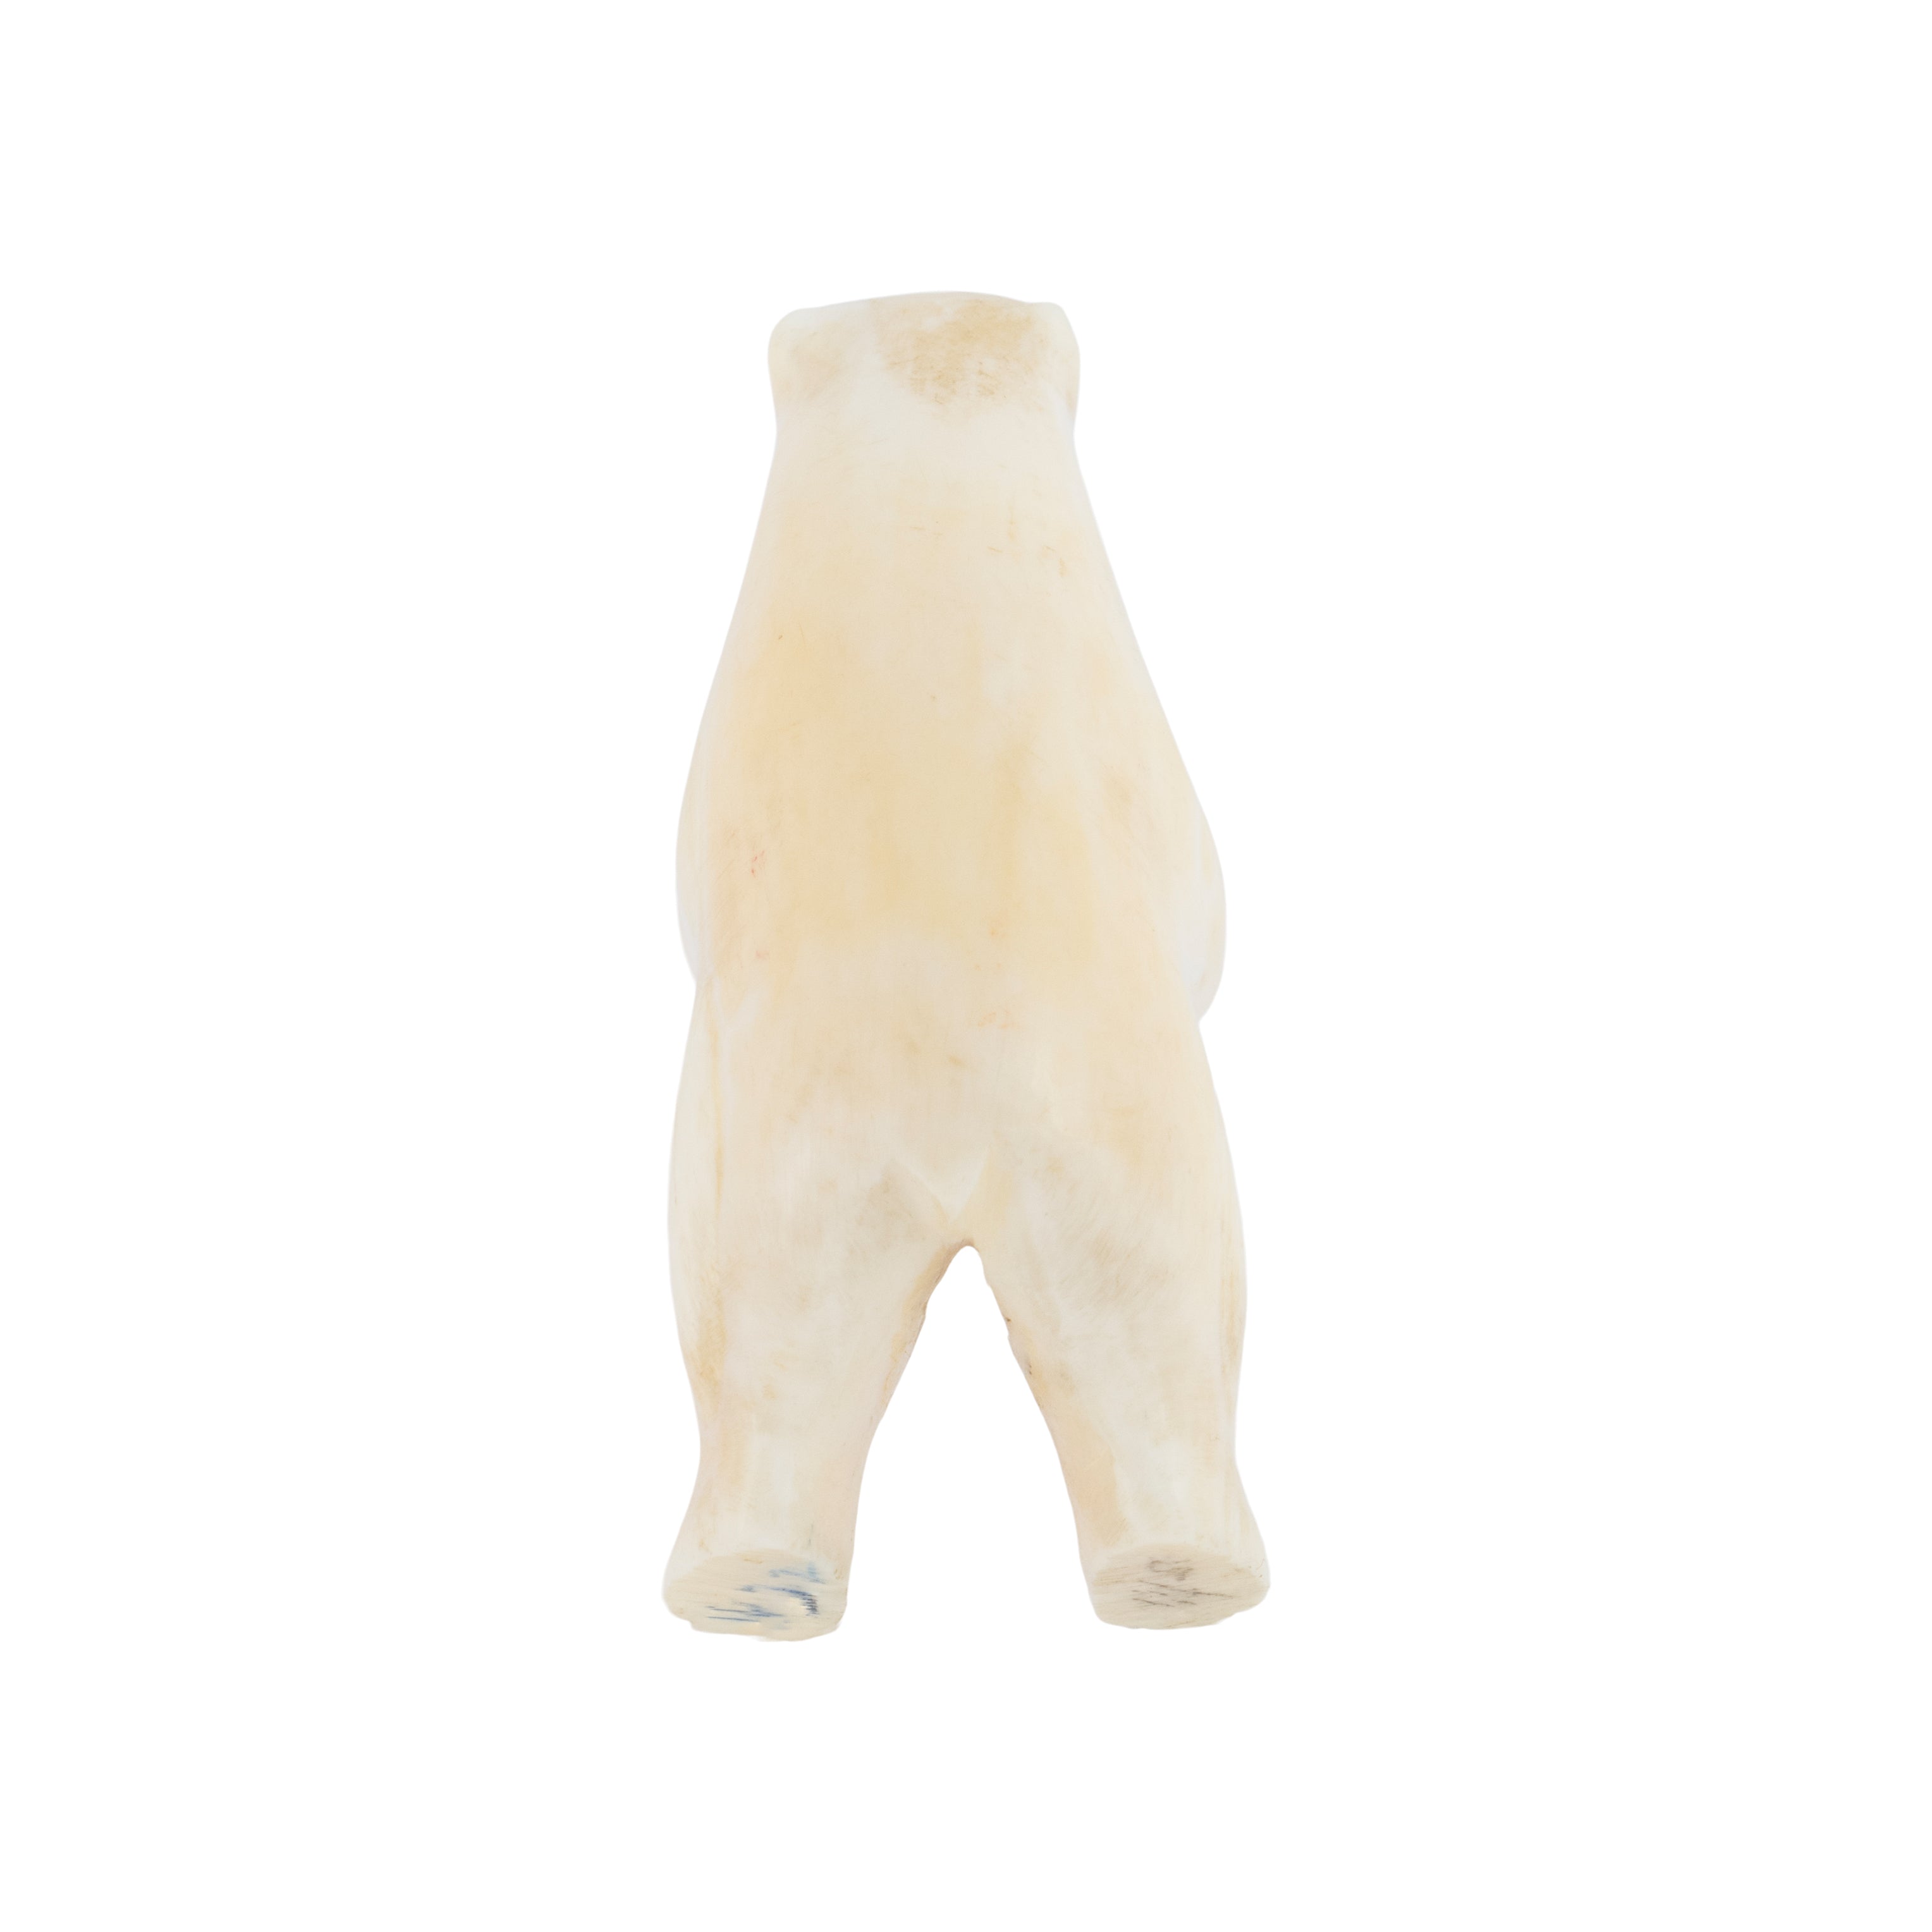 Miniature Inuit Ivory Polar Bear